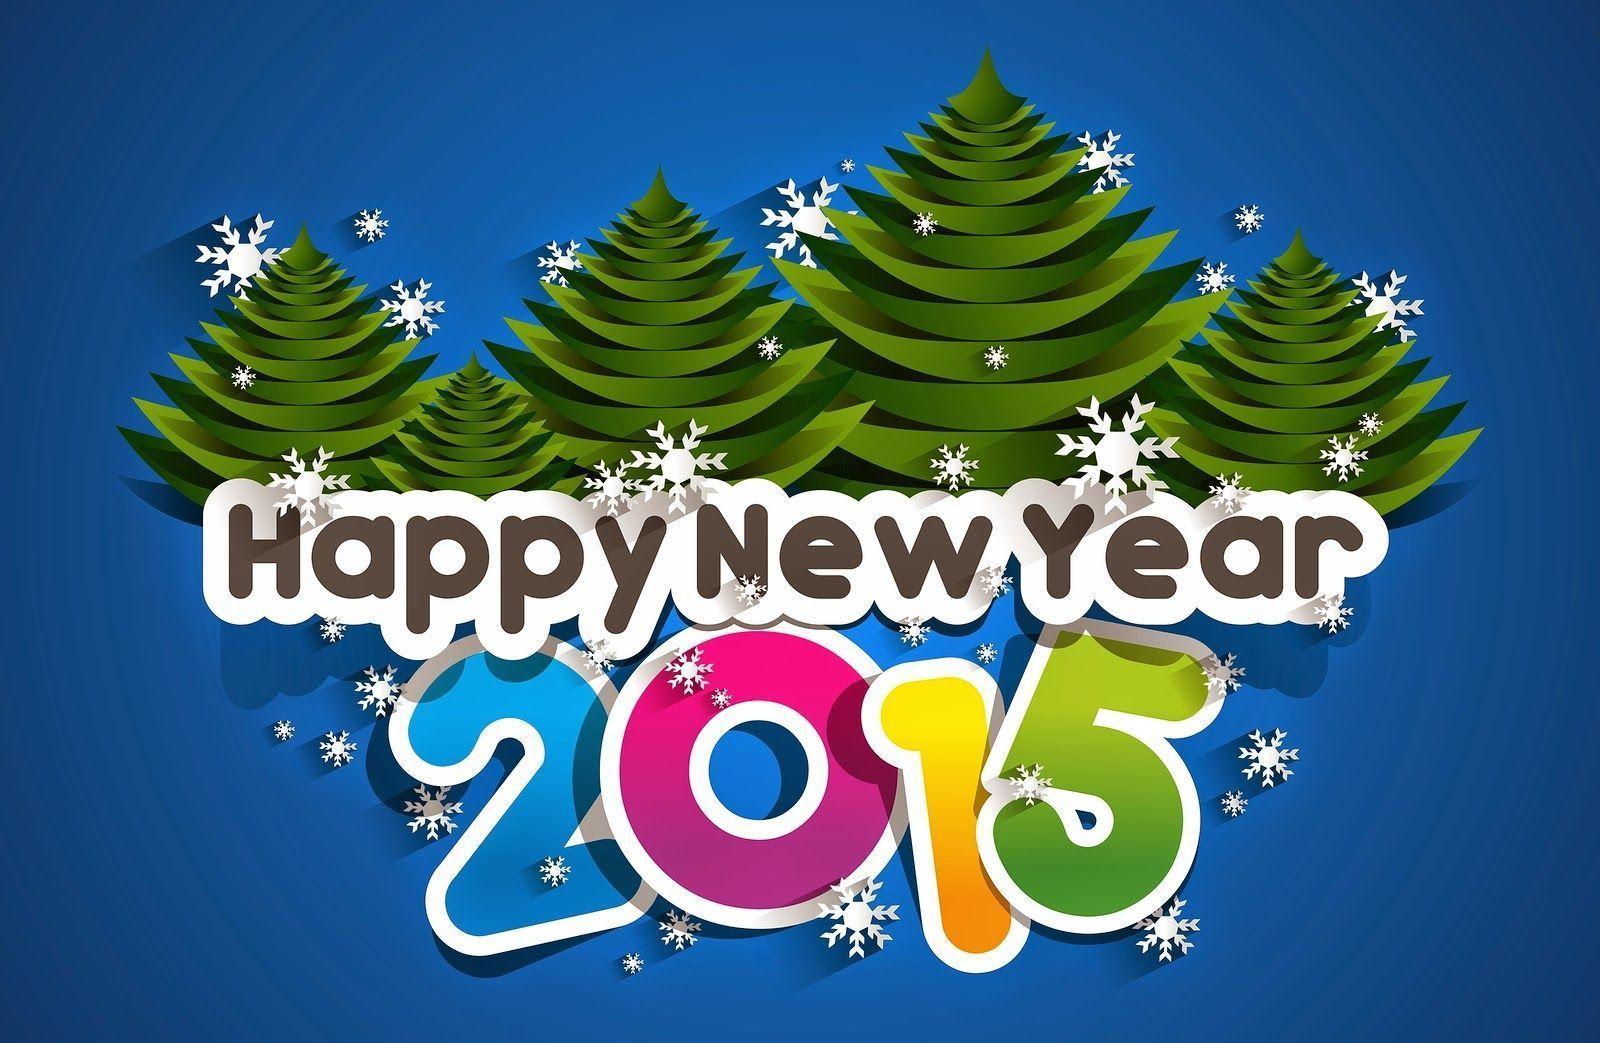 happy new year 2015 wallpaper 1080p. Wallput